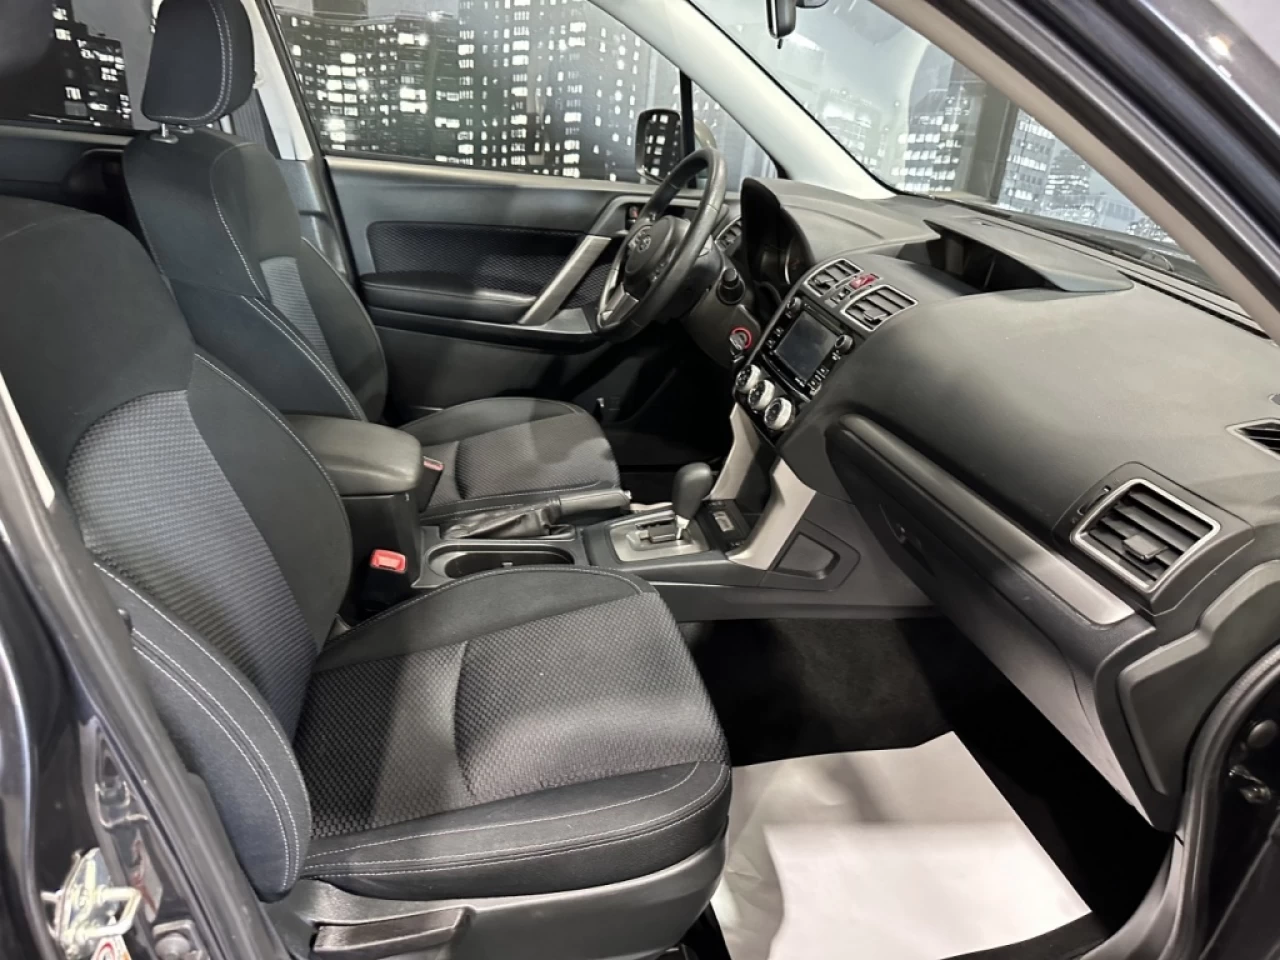 2018 Subaru Forester CONVENIENCE AWD CAMERA A/C AVEC 157KM Image principale